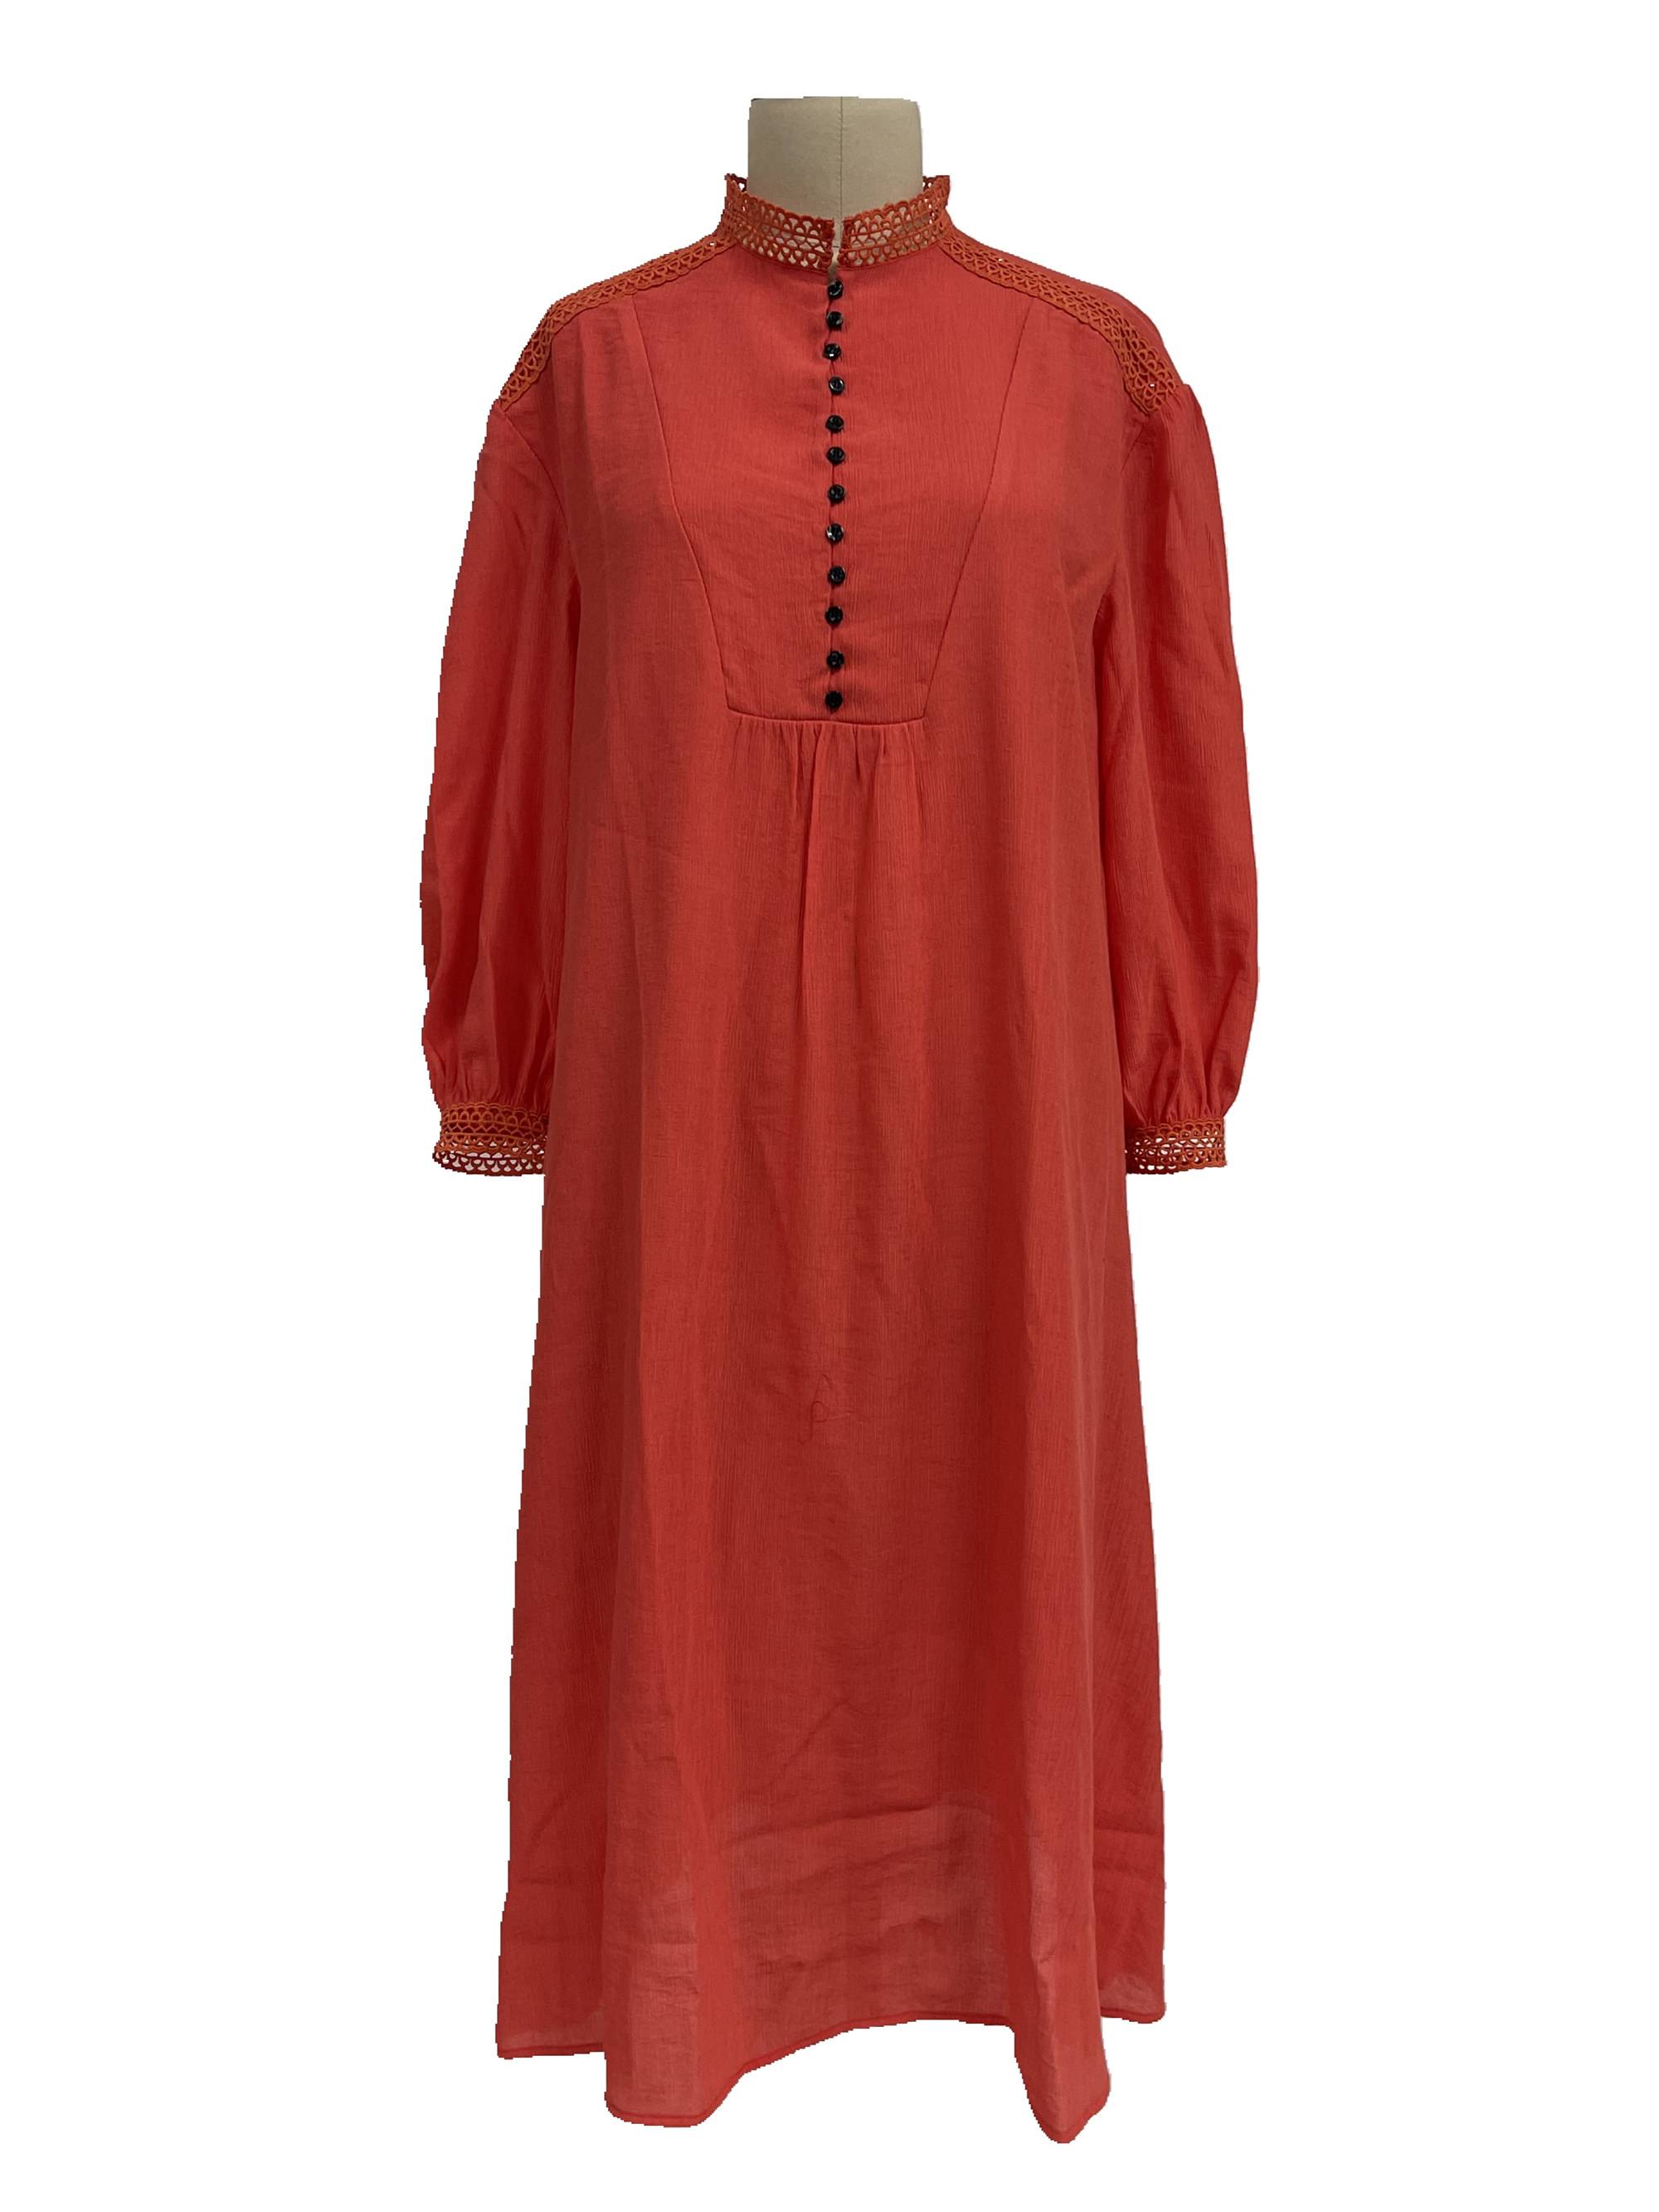 2021 moderne crêpe jurk met lange mouwen en kanten details damesjurk groothandel